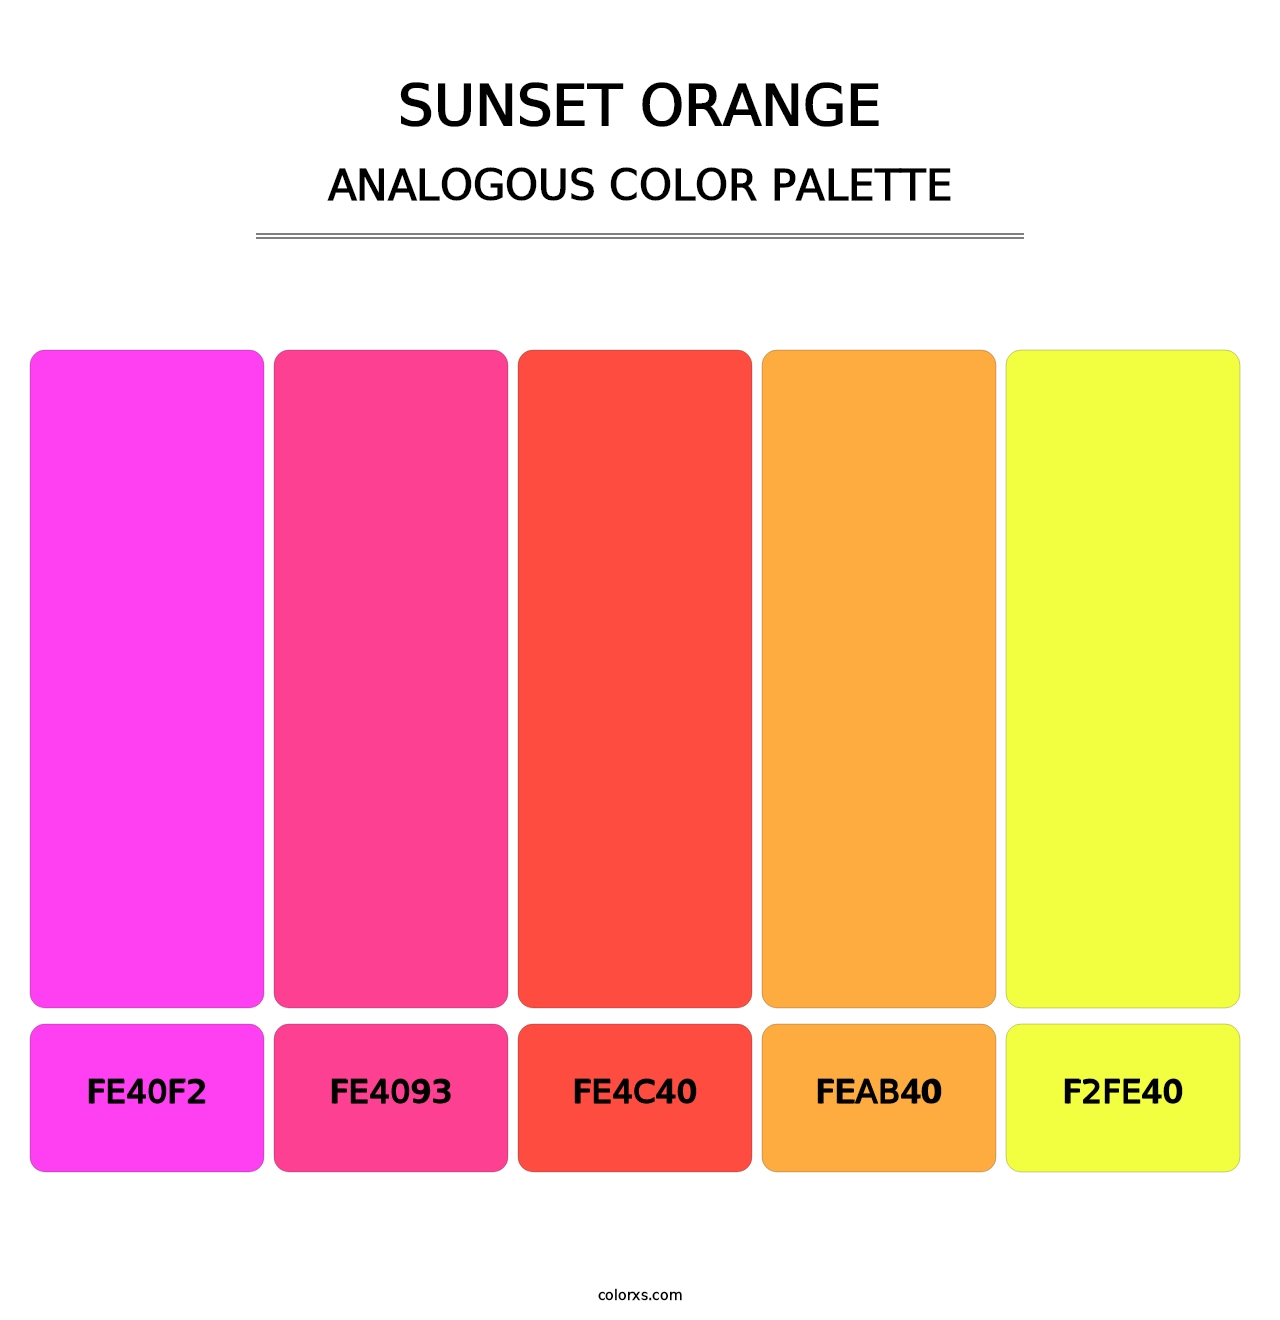 Sunset Orange - Analogous Color Palette